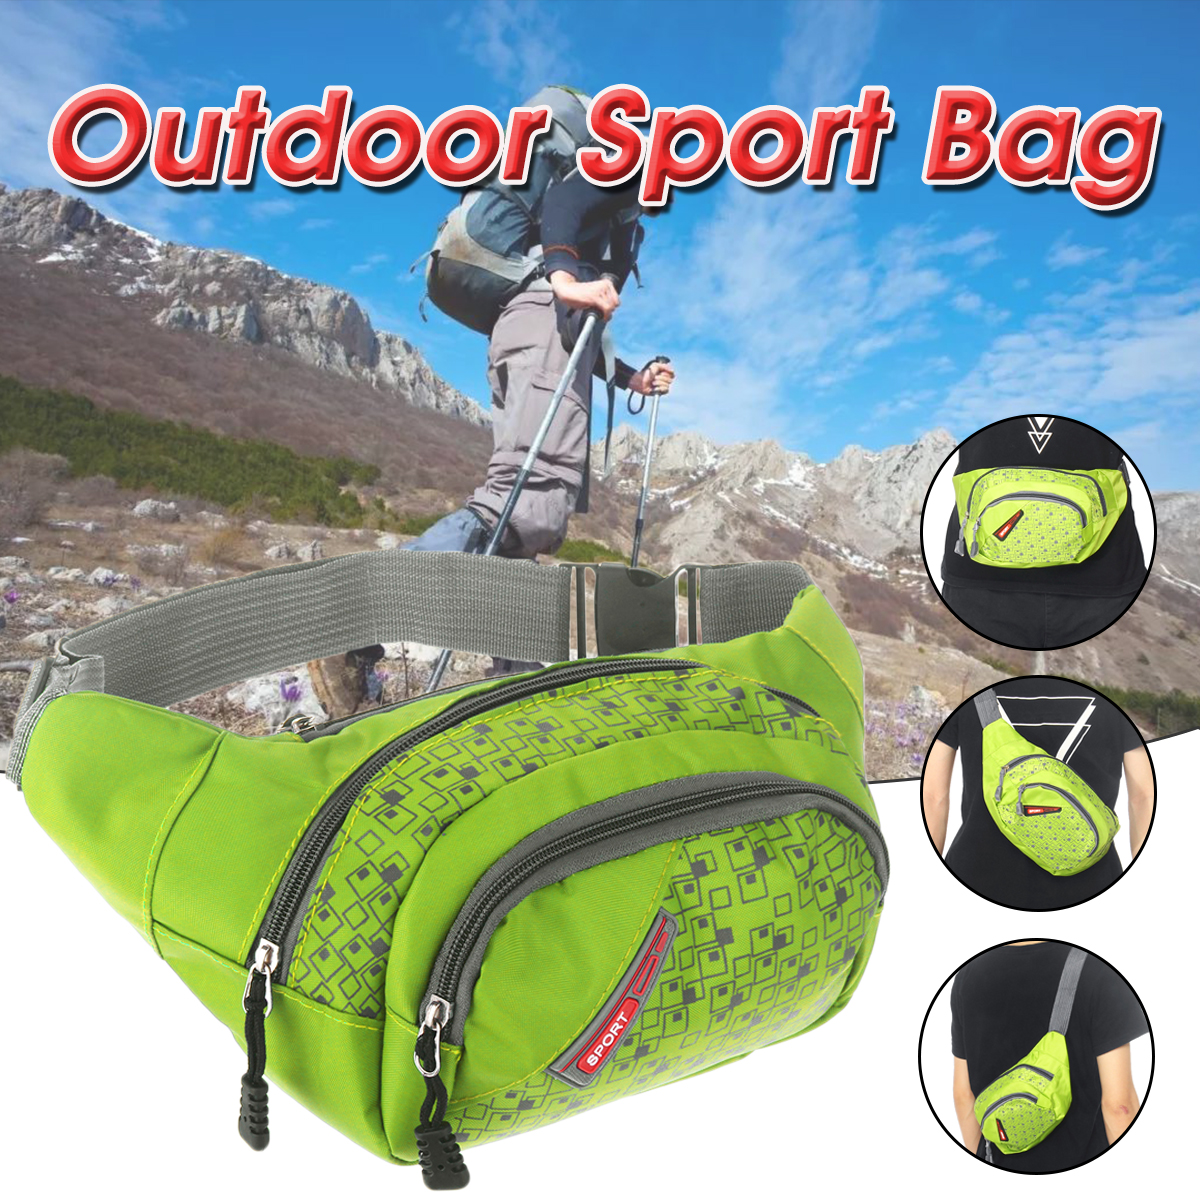 Outdoor-Sport-Bag-Waist-Bag-Phone-Bag-Crossbody-Bag-For-Travel-Sports-Running-Jogging-Hiking-Cycling-1515319-2